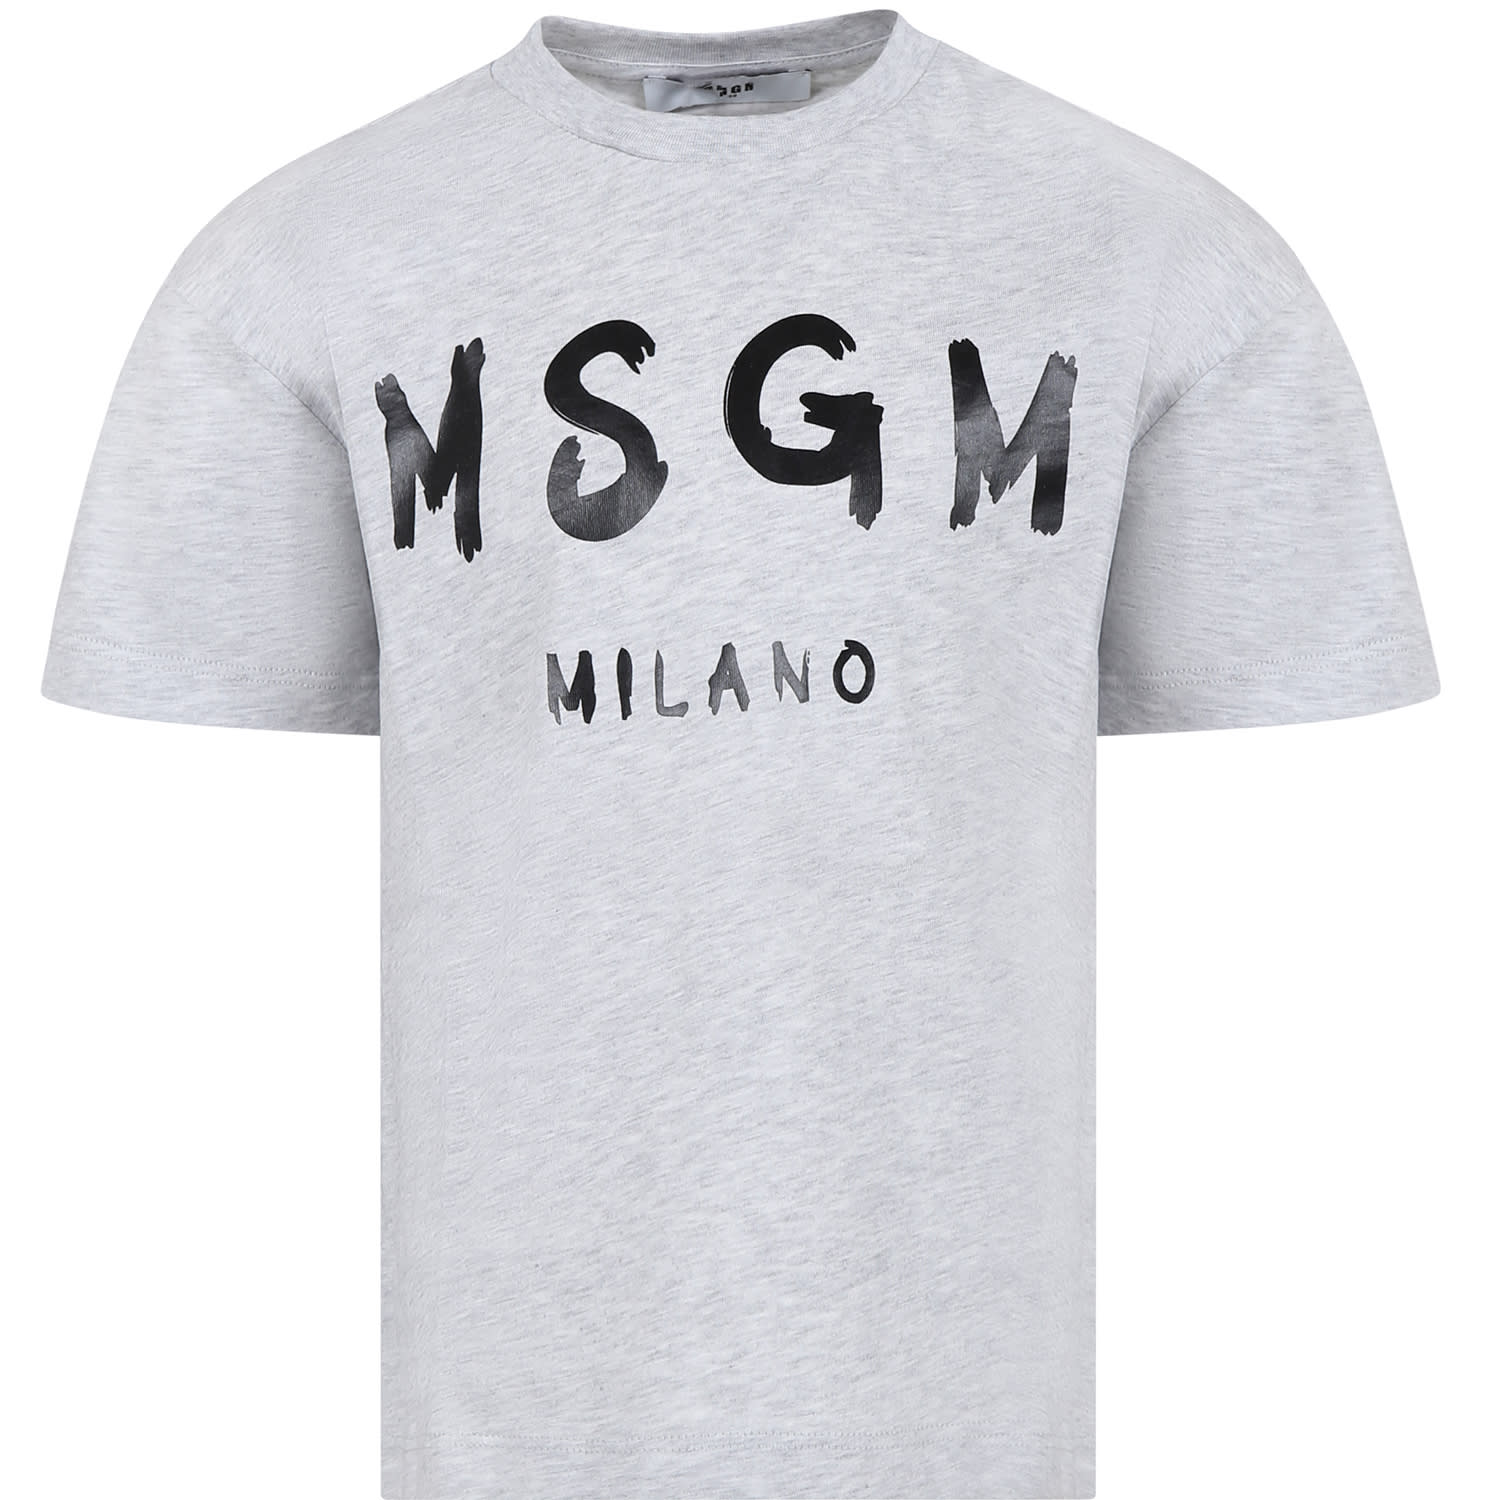 Msgm Grey T-shirt For Kids With Logo In Grigio Chiaro